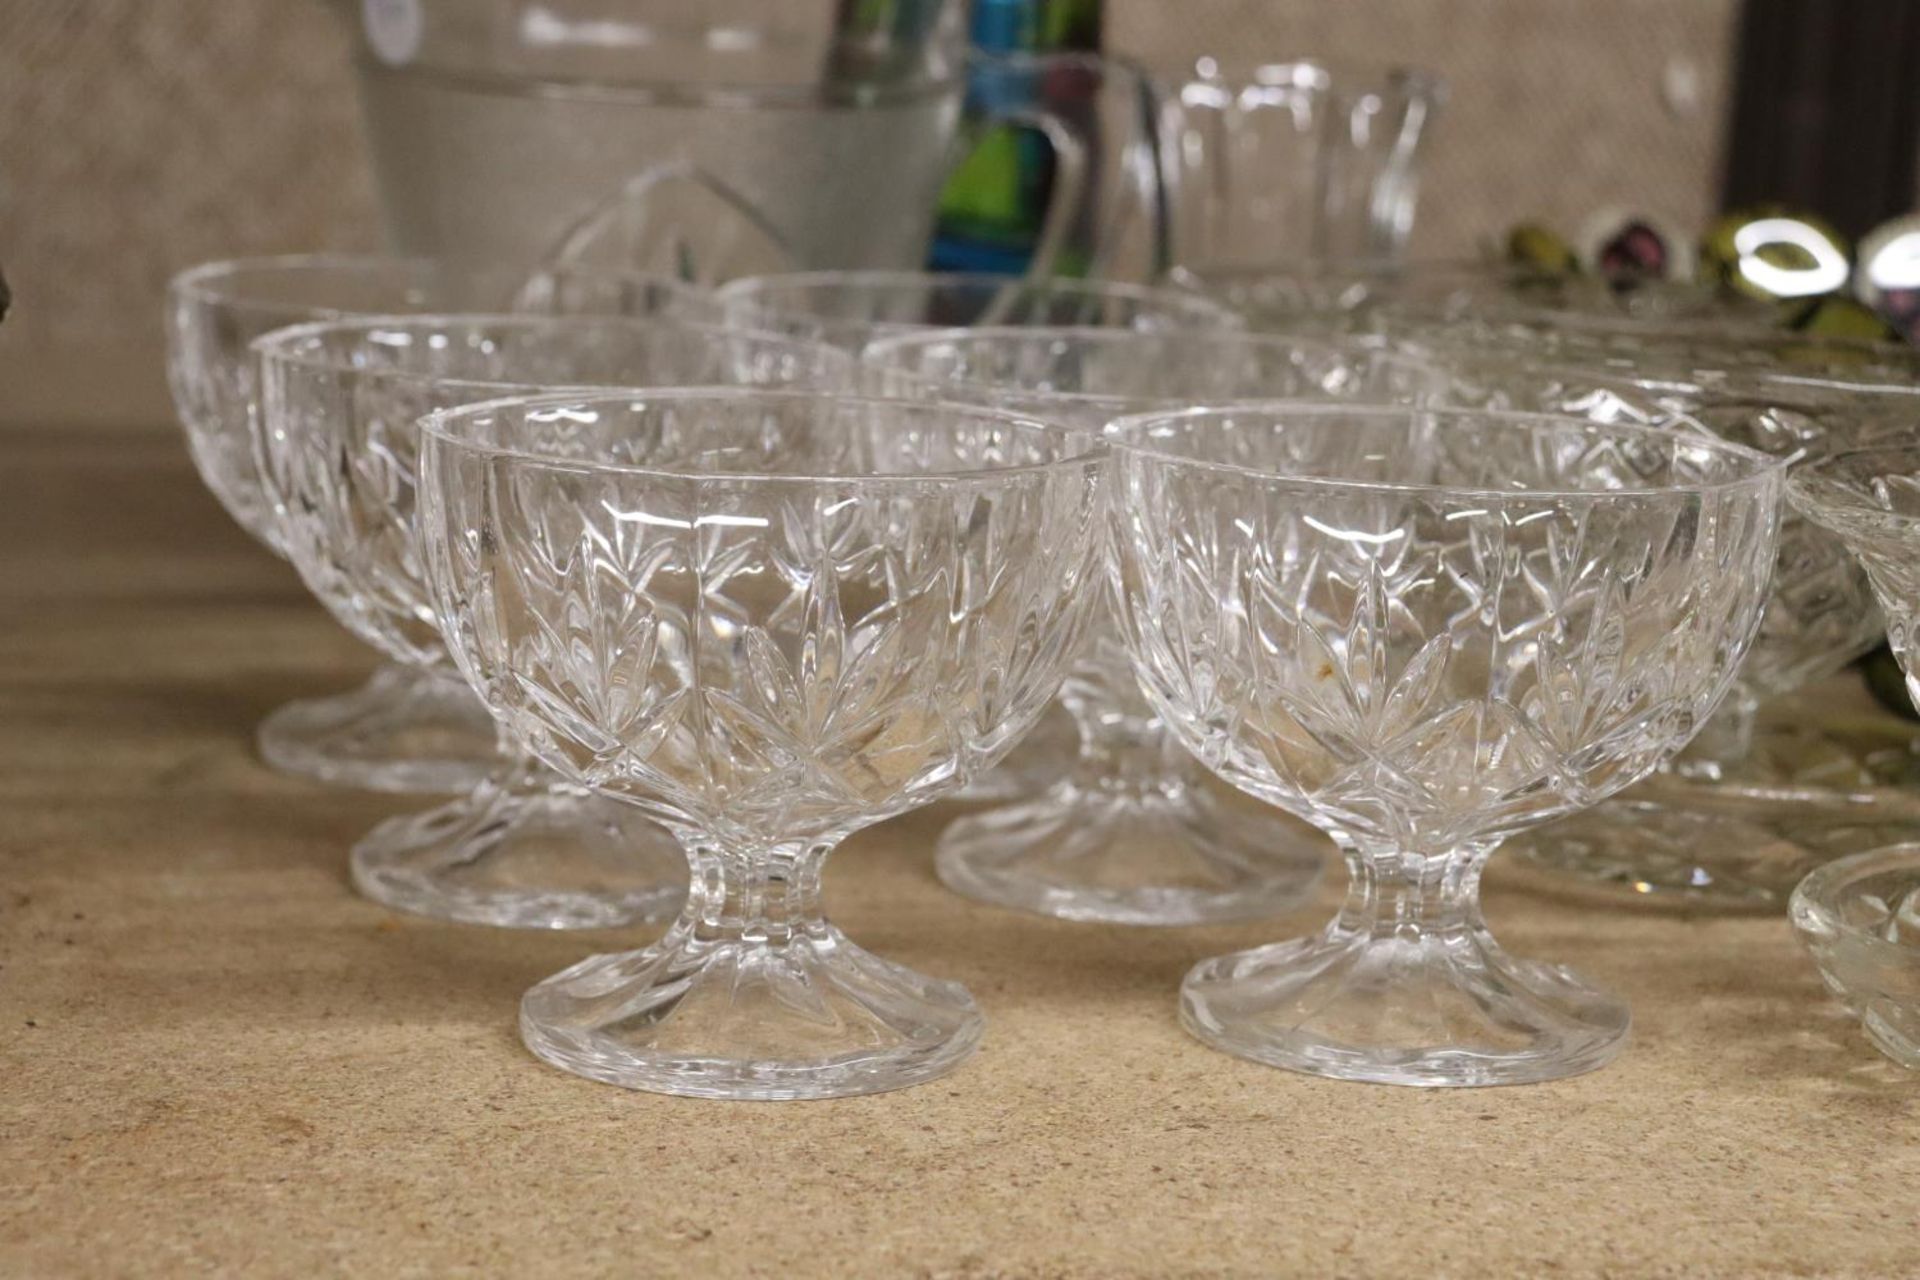 A QUANTITY OF GLASSWARE TO INCLUDE A LARGE COLOURED BOWL, DESSERT BOWLS, A JUG, ETC - Bild 2 aus 7